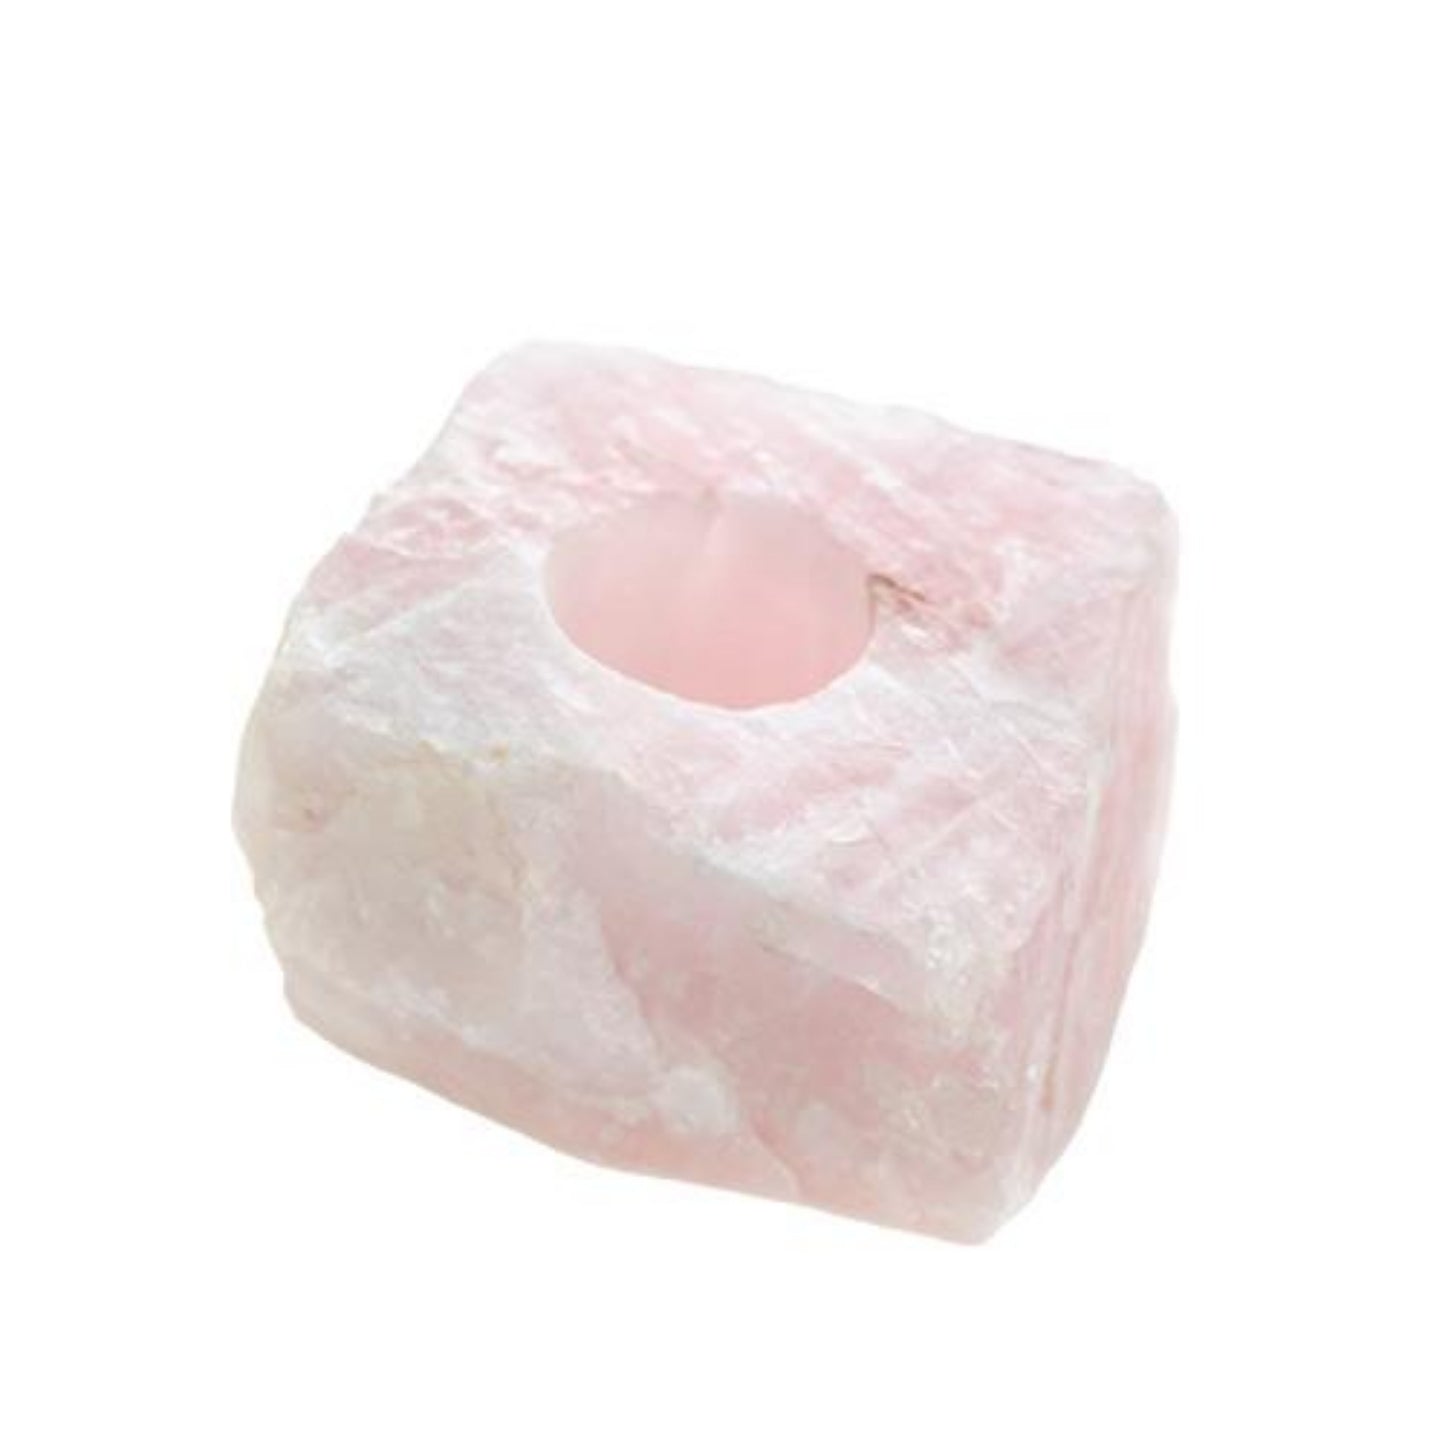 Candle Crystal Homewares Love  Rose Quartz Rough Cut. Pale Pink Square cut rose quartz crystal for tealight candle.  Crystal Homewares.   Images is on white showing space for tealight candle in top center of rose quartz